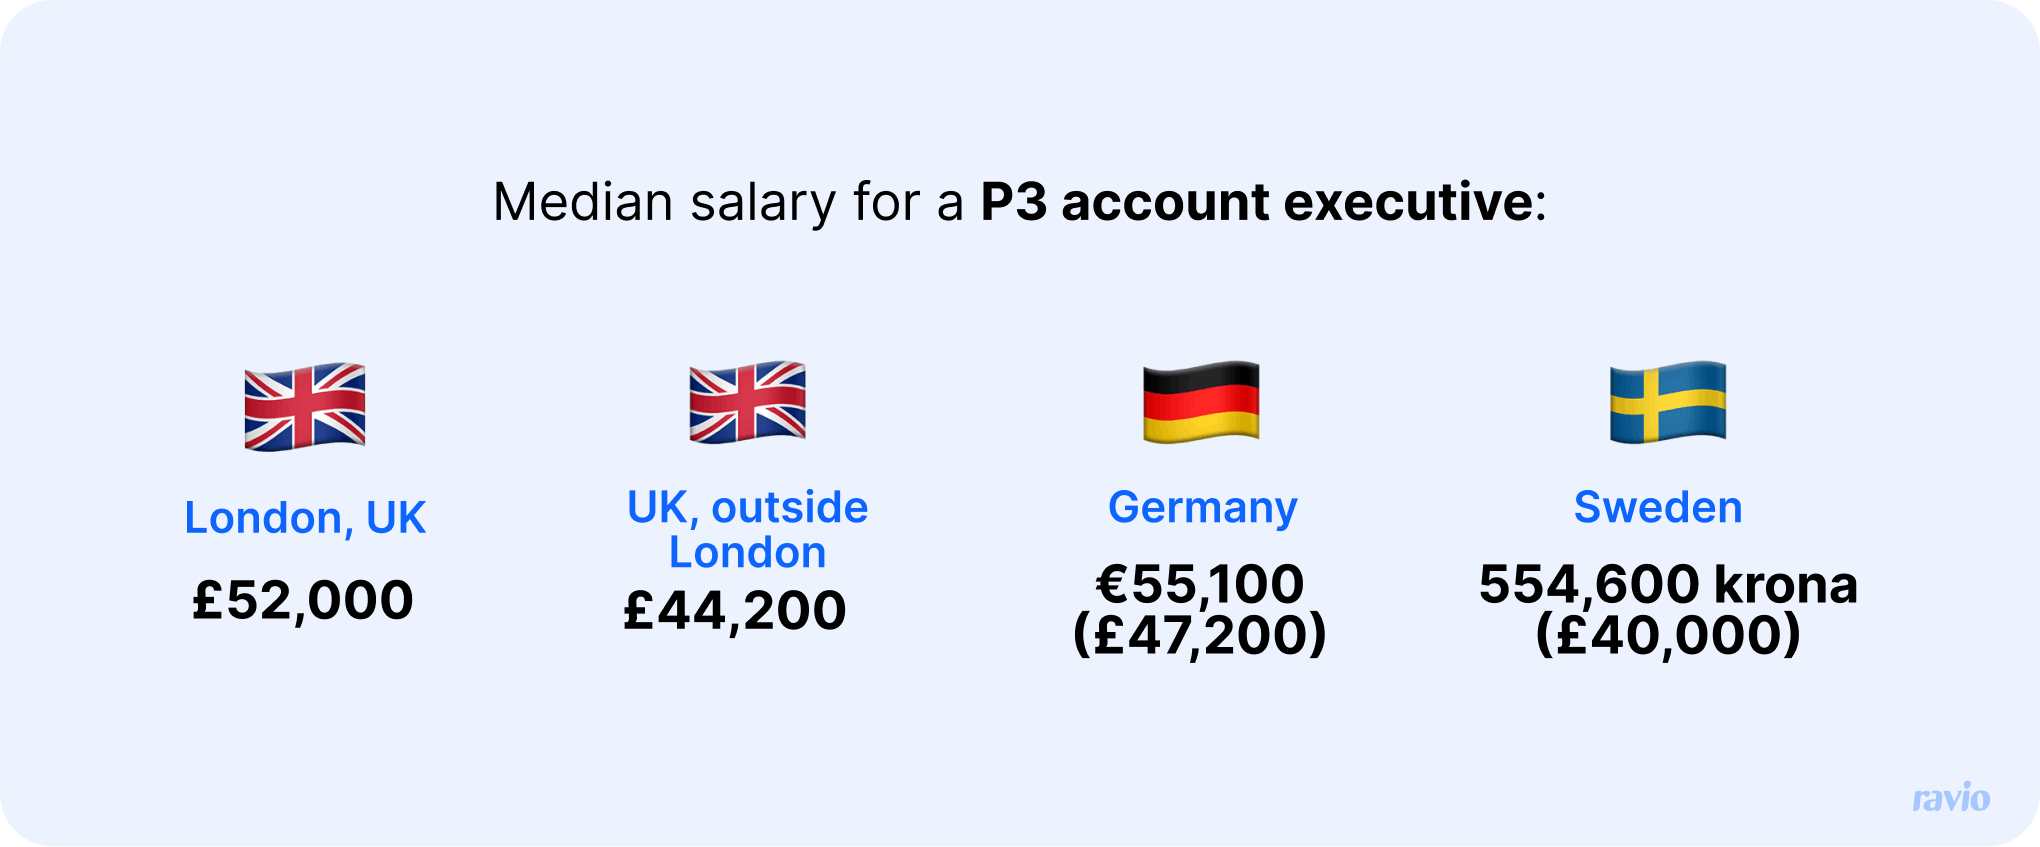 Median salary for a P3 account executive. UK, London: £52,000. UK, outside London: £44,200. Germany: 55,100 euros (£47,200). Sweden: 554,600 krona (£40,000).